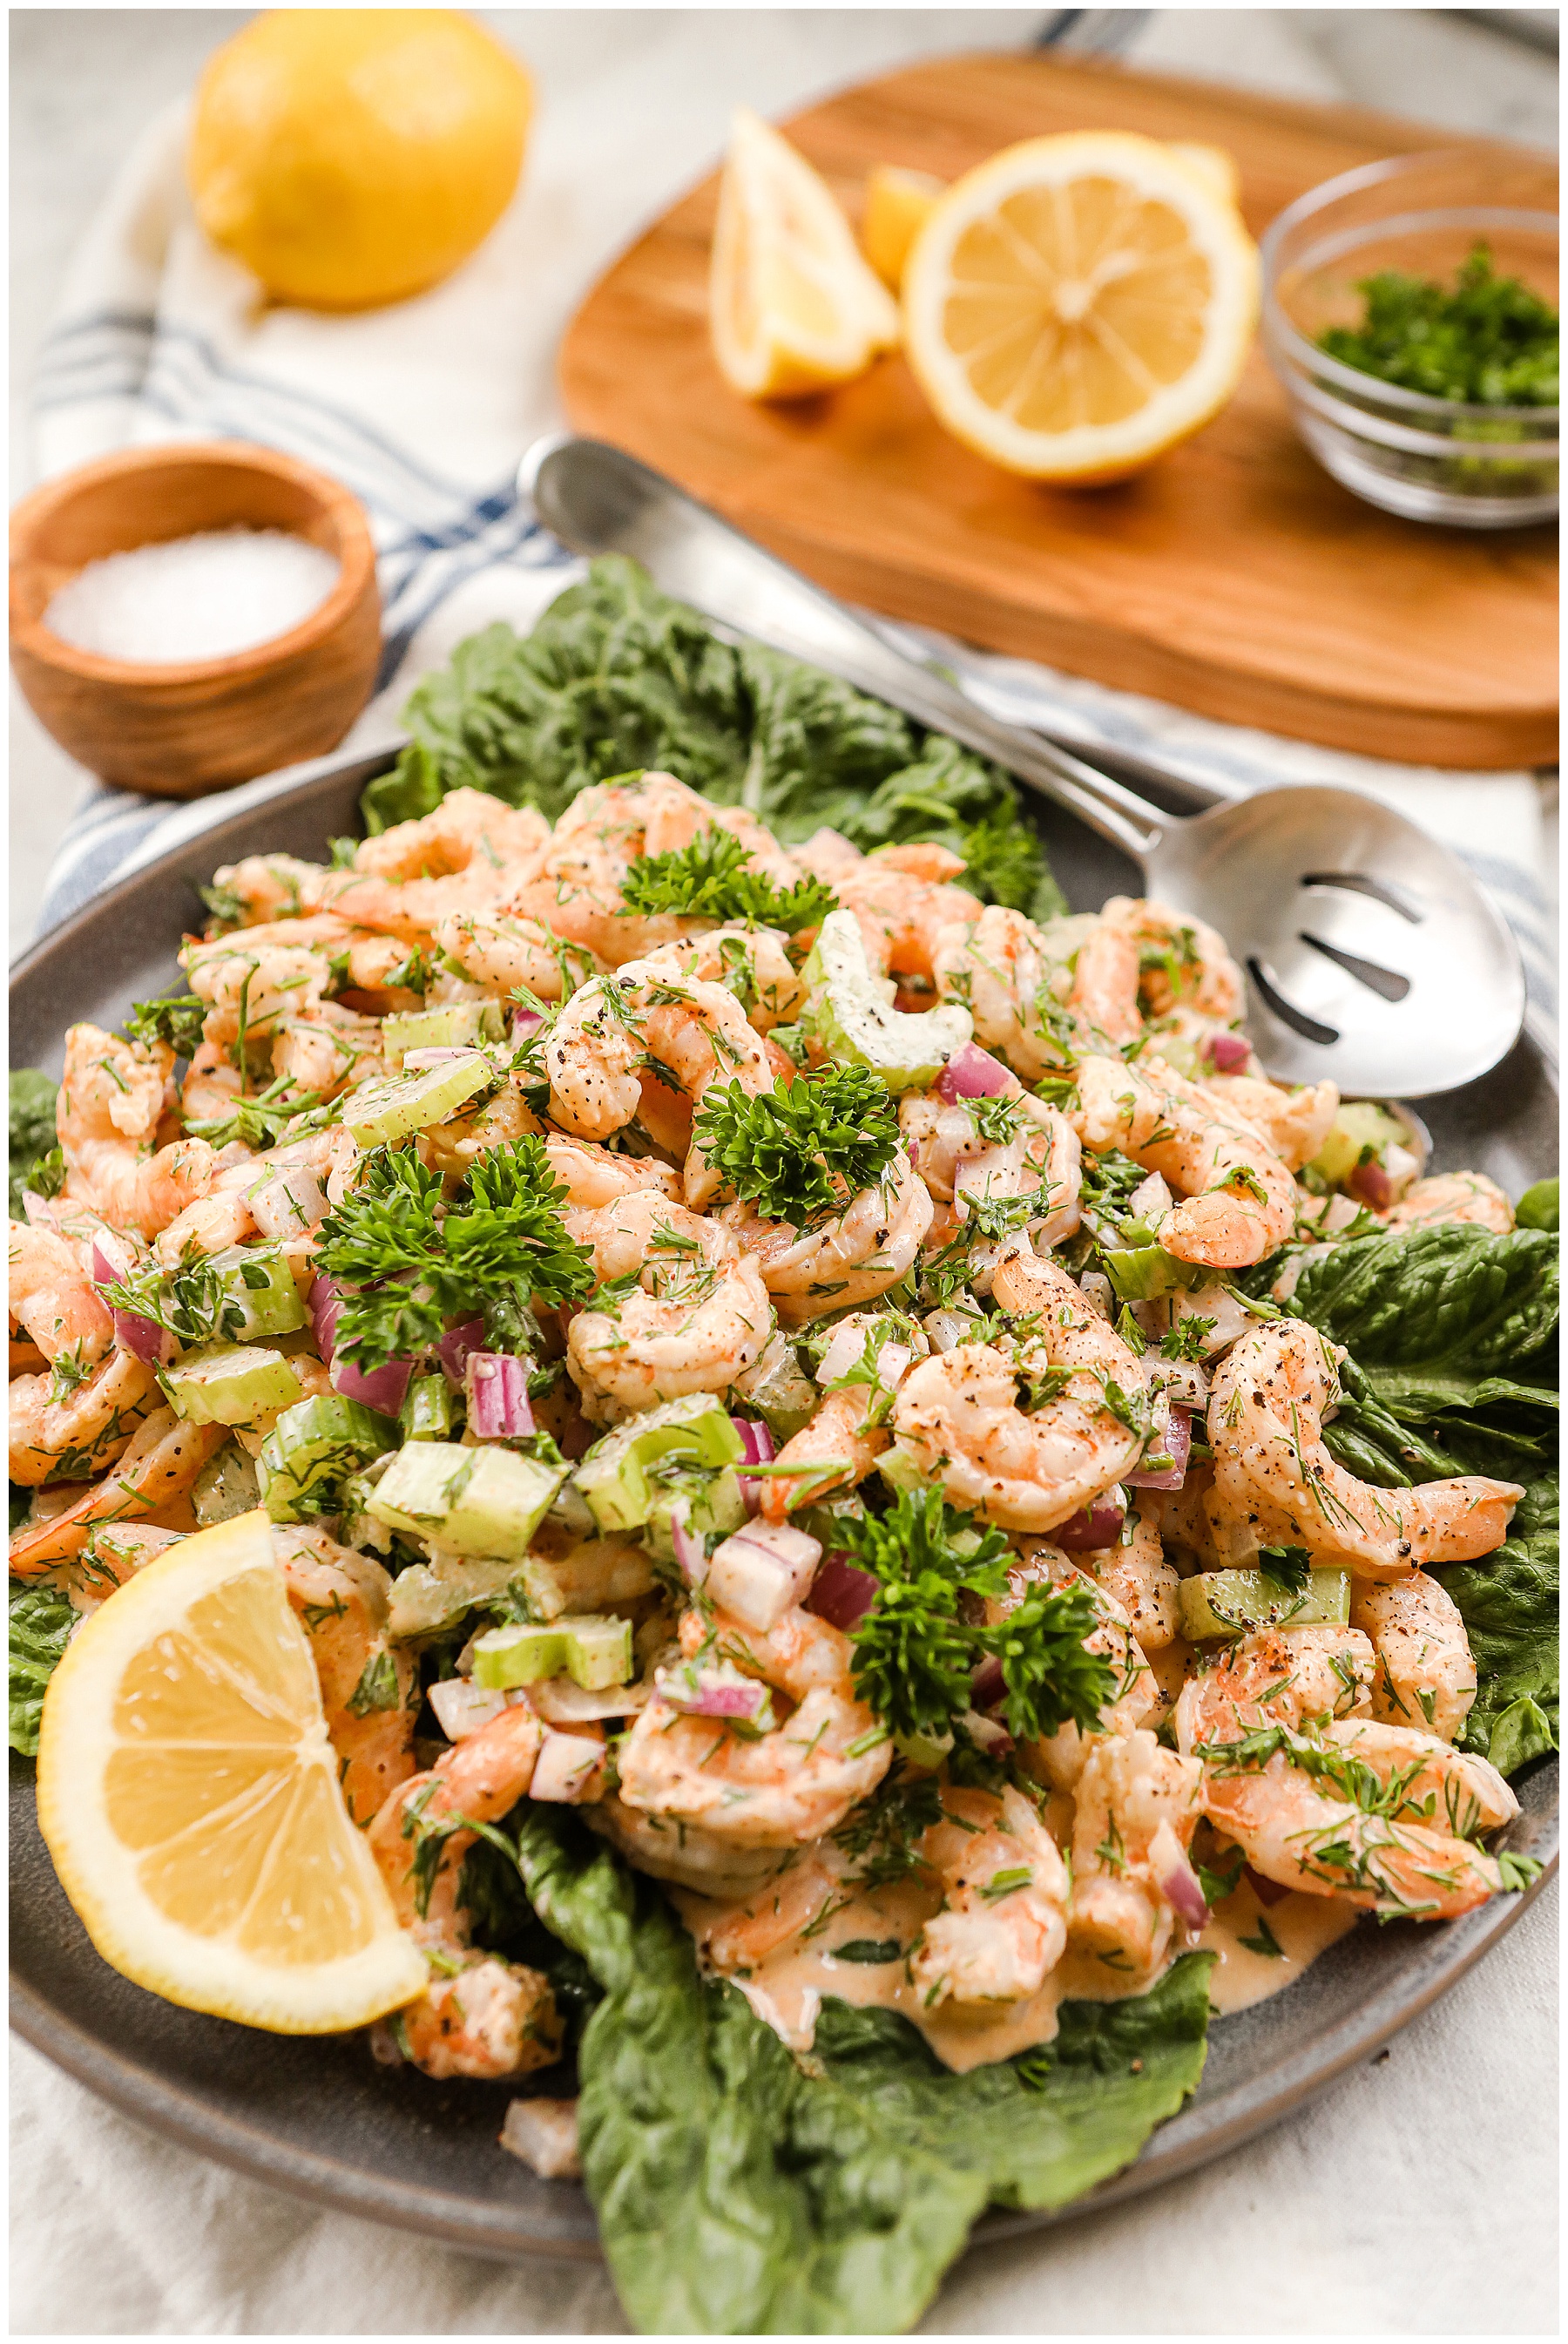 Shrimp Salad with Old Bay seasoning